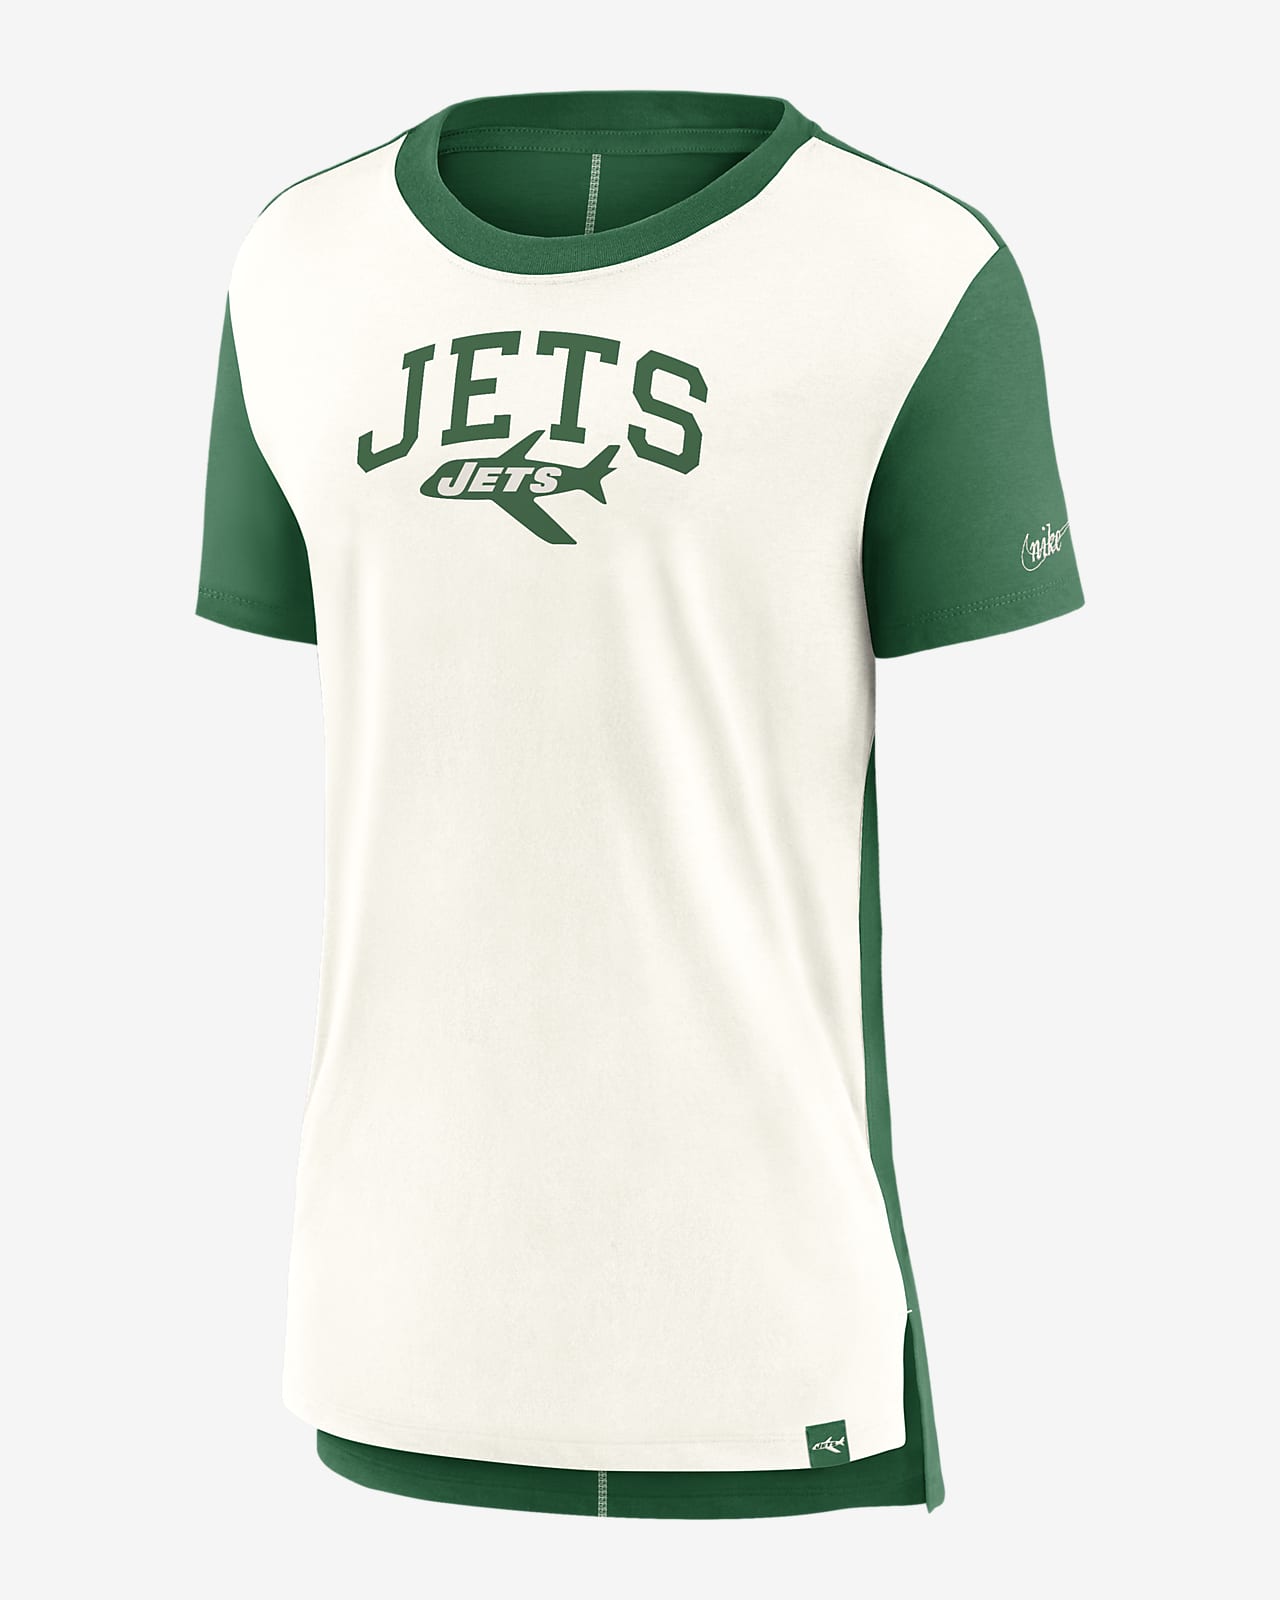 New York Jets Women's Nike NFL T-Shirt